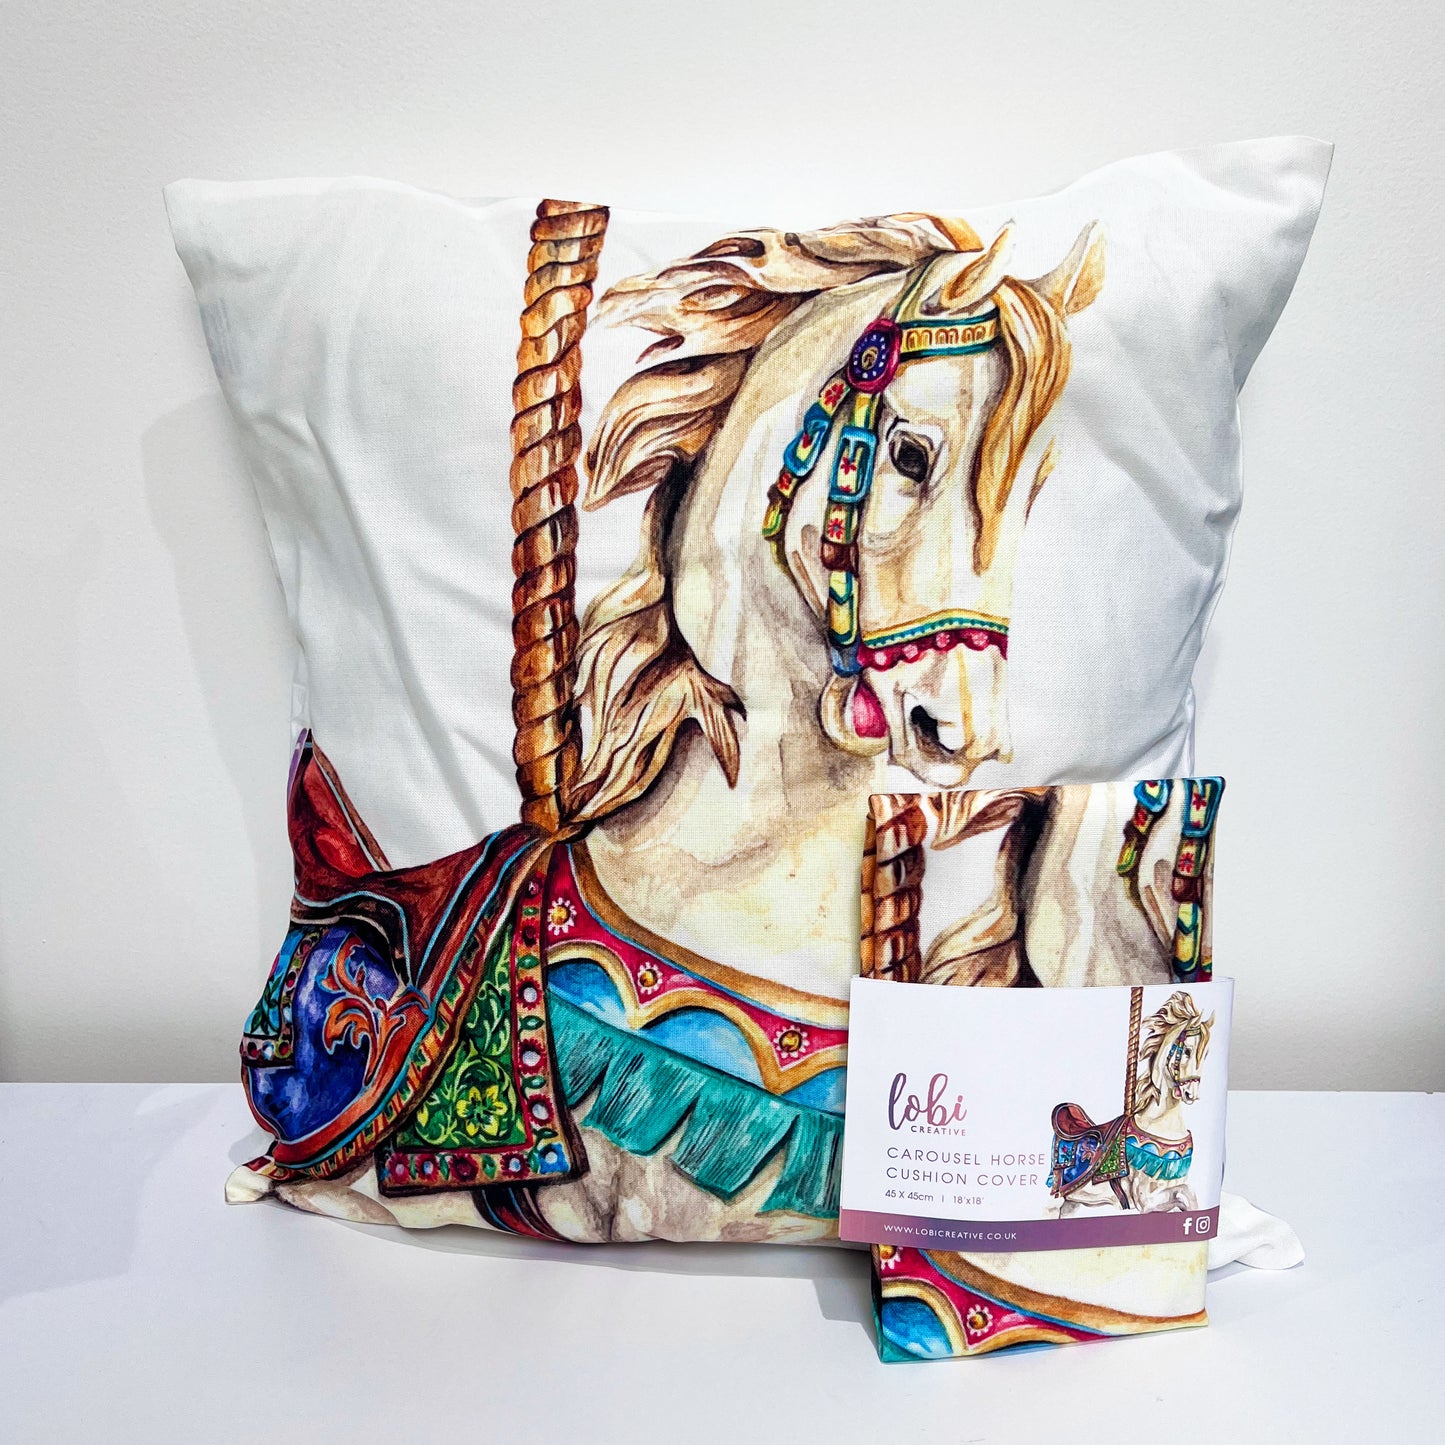 Carousel Horse cushion cover